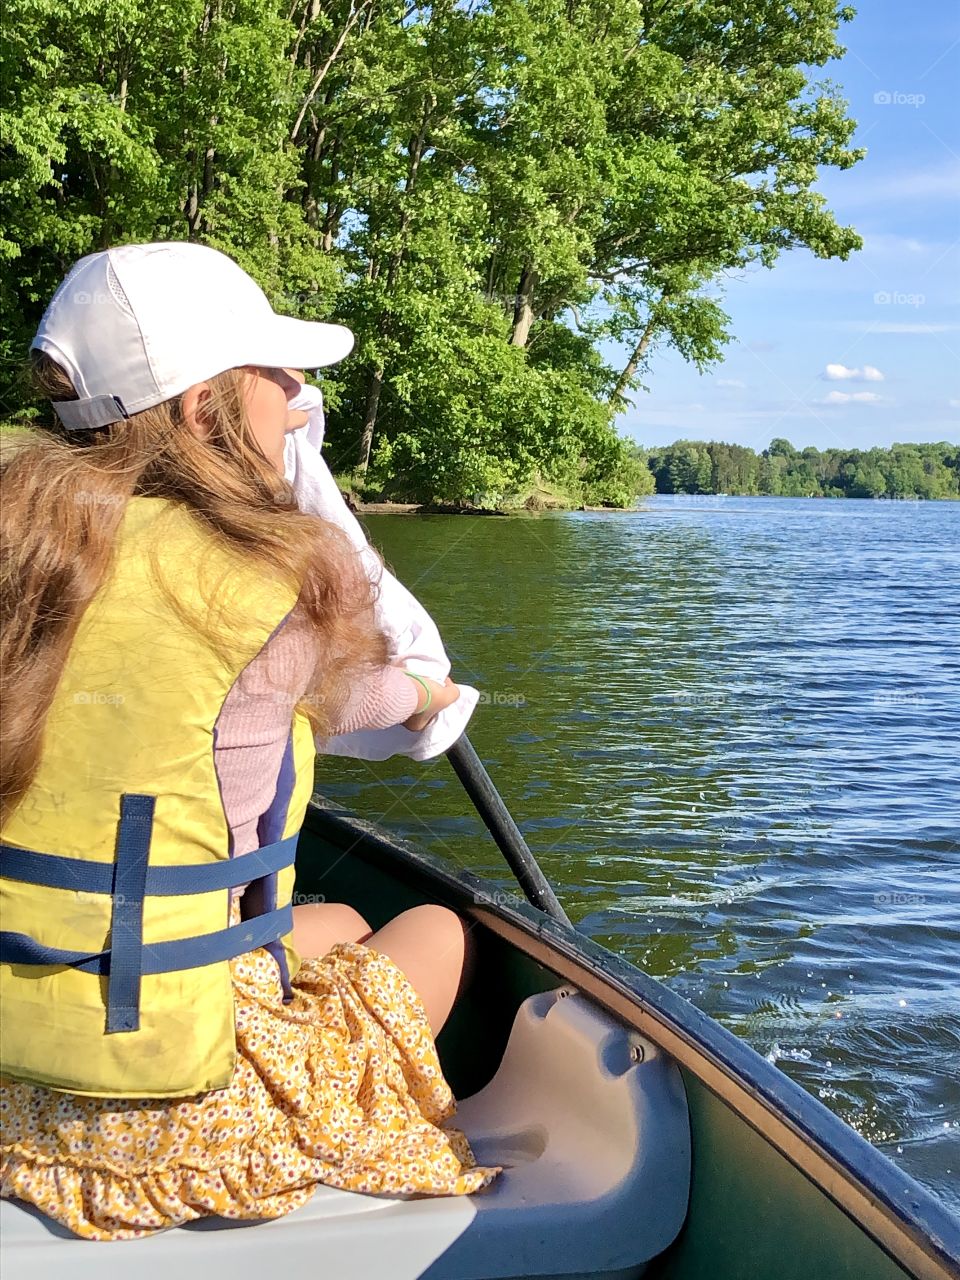 Briana in Canoe at Mogadore Lake 